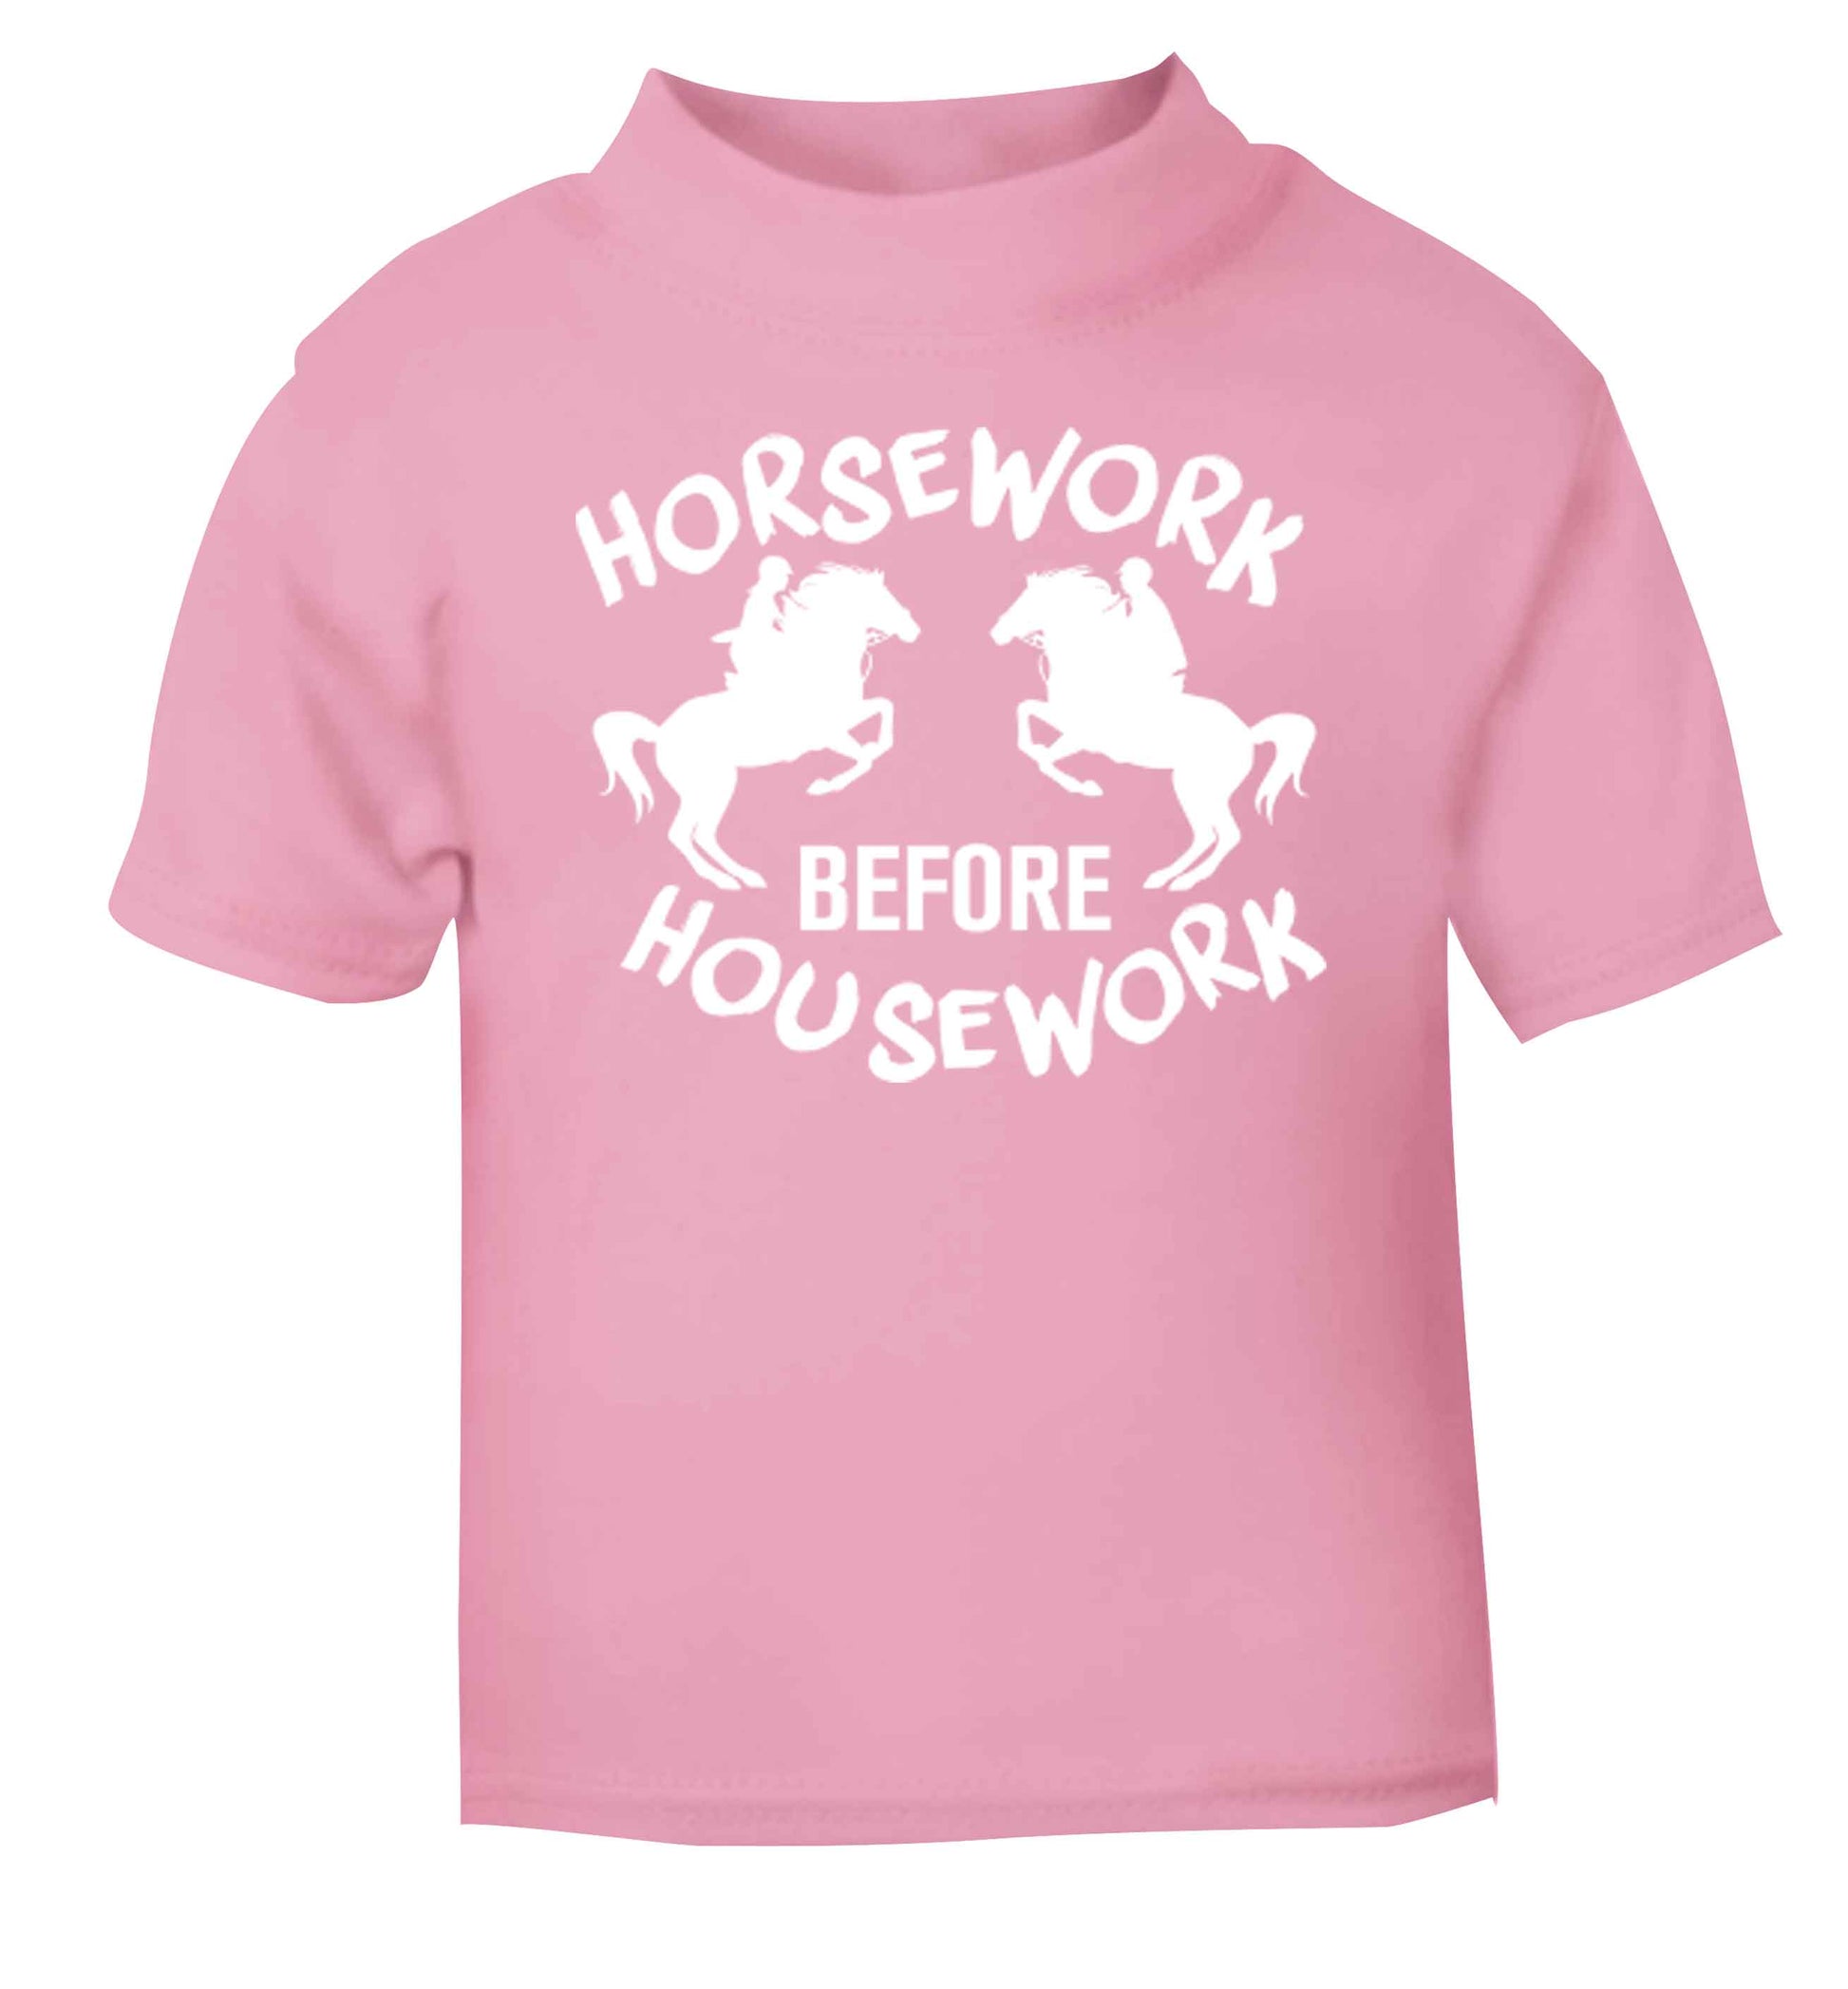 Horsework before housework light pink baby toddler Tshirt 2 Years